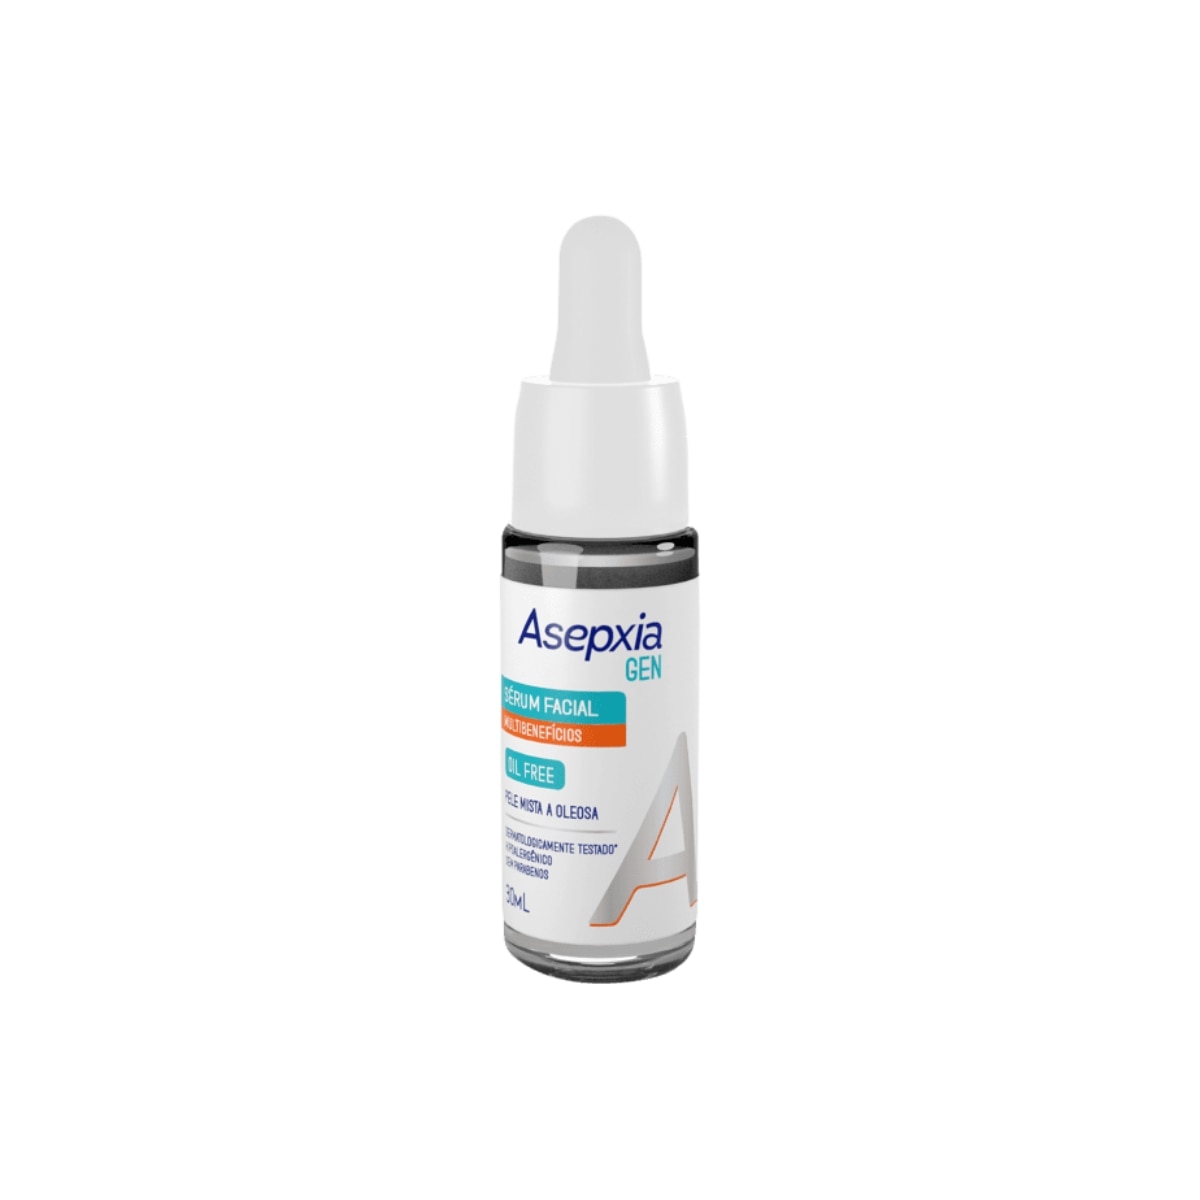 Serum Facial Asepxia Gen Oil Free 30ml